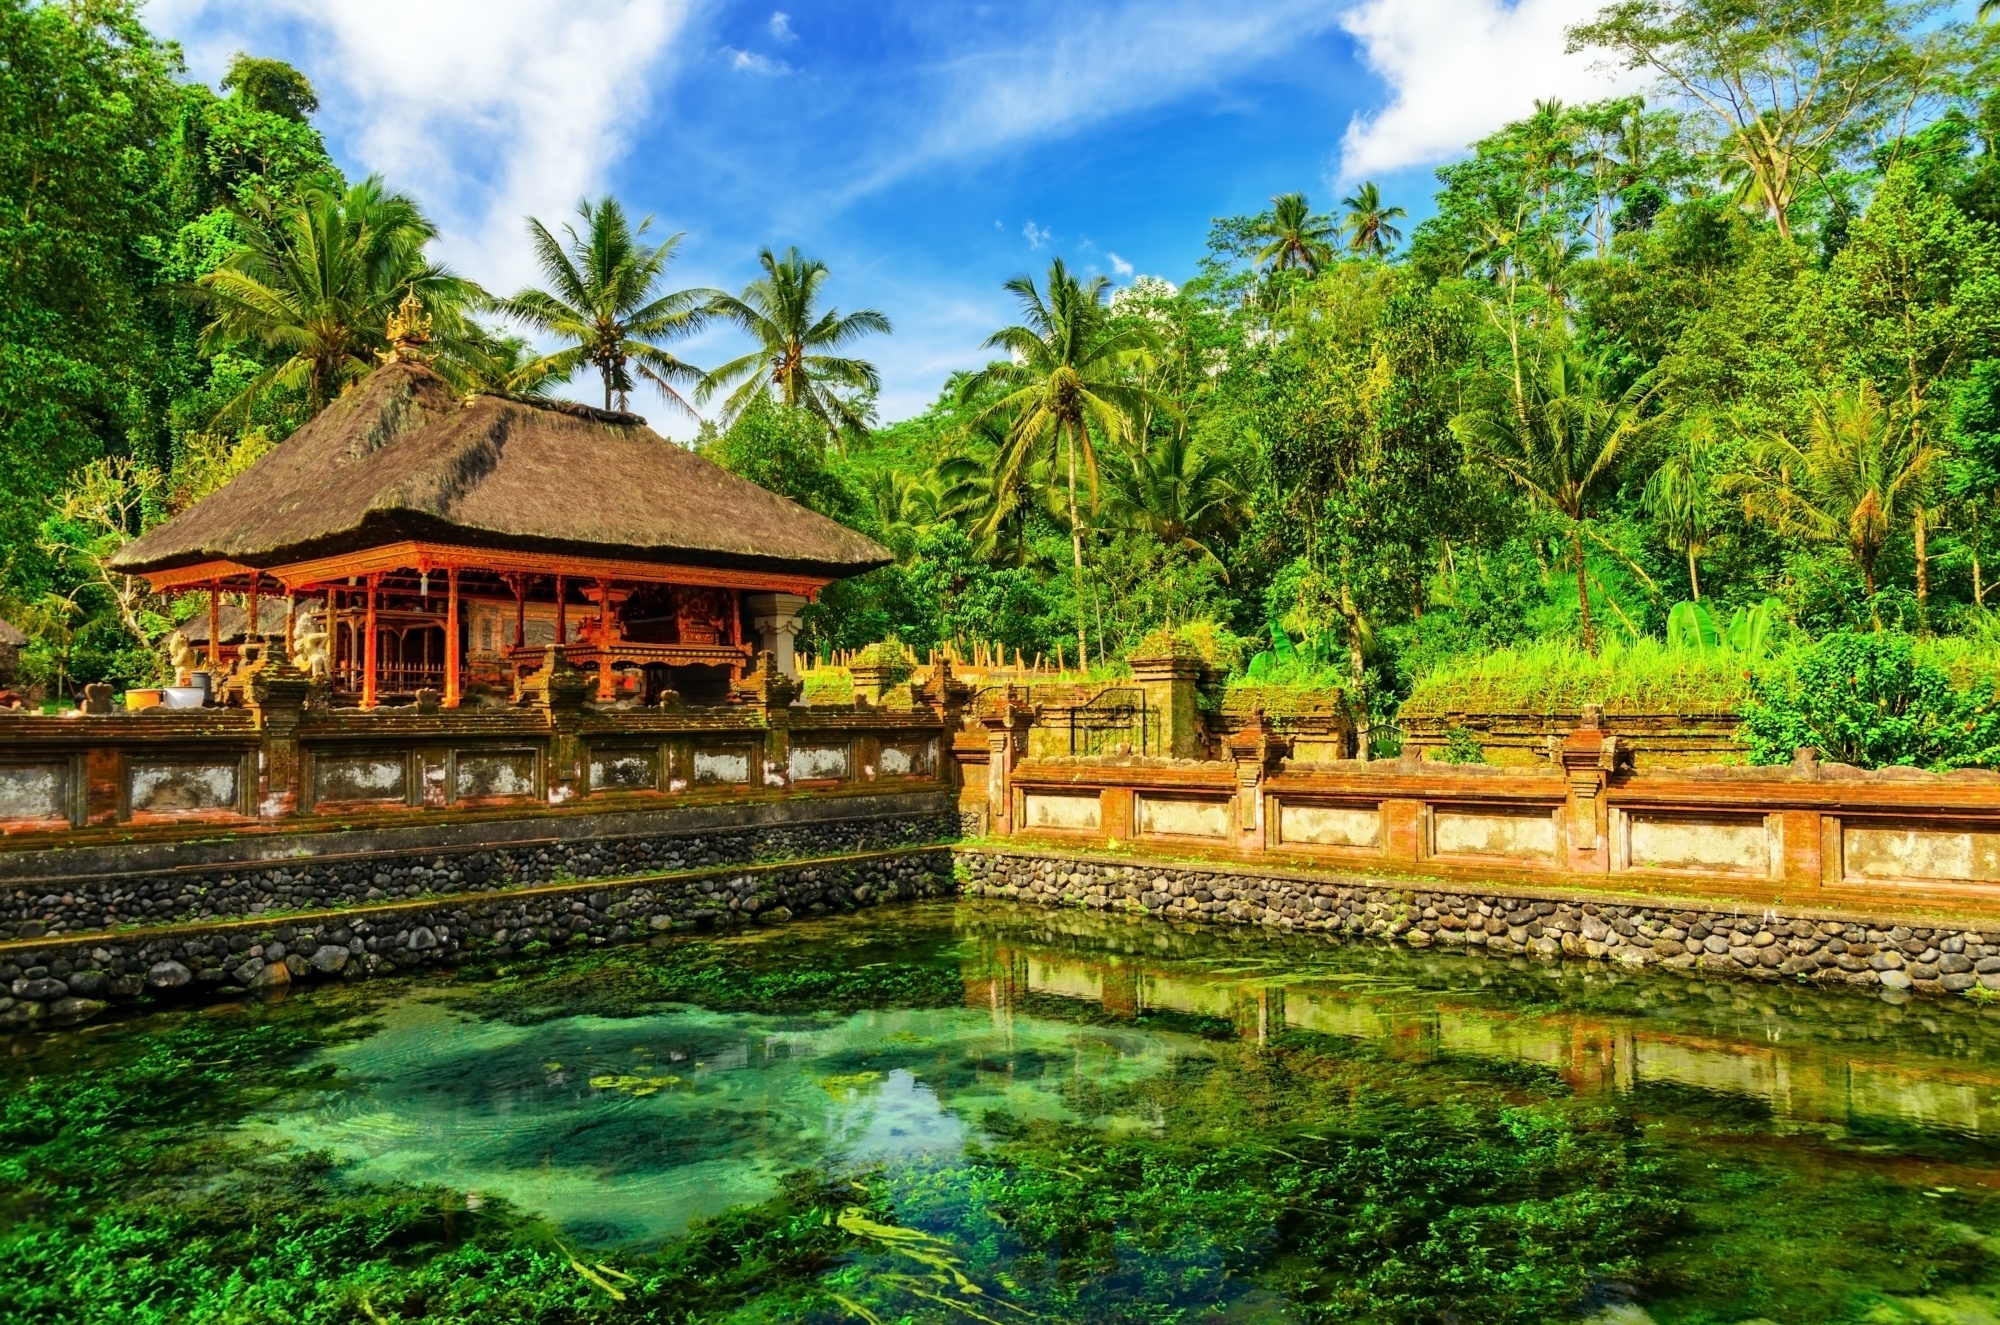 Bâtiment et bassin de Tirta Empul ) Tampaksiring Bali